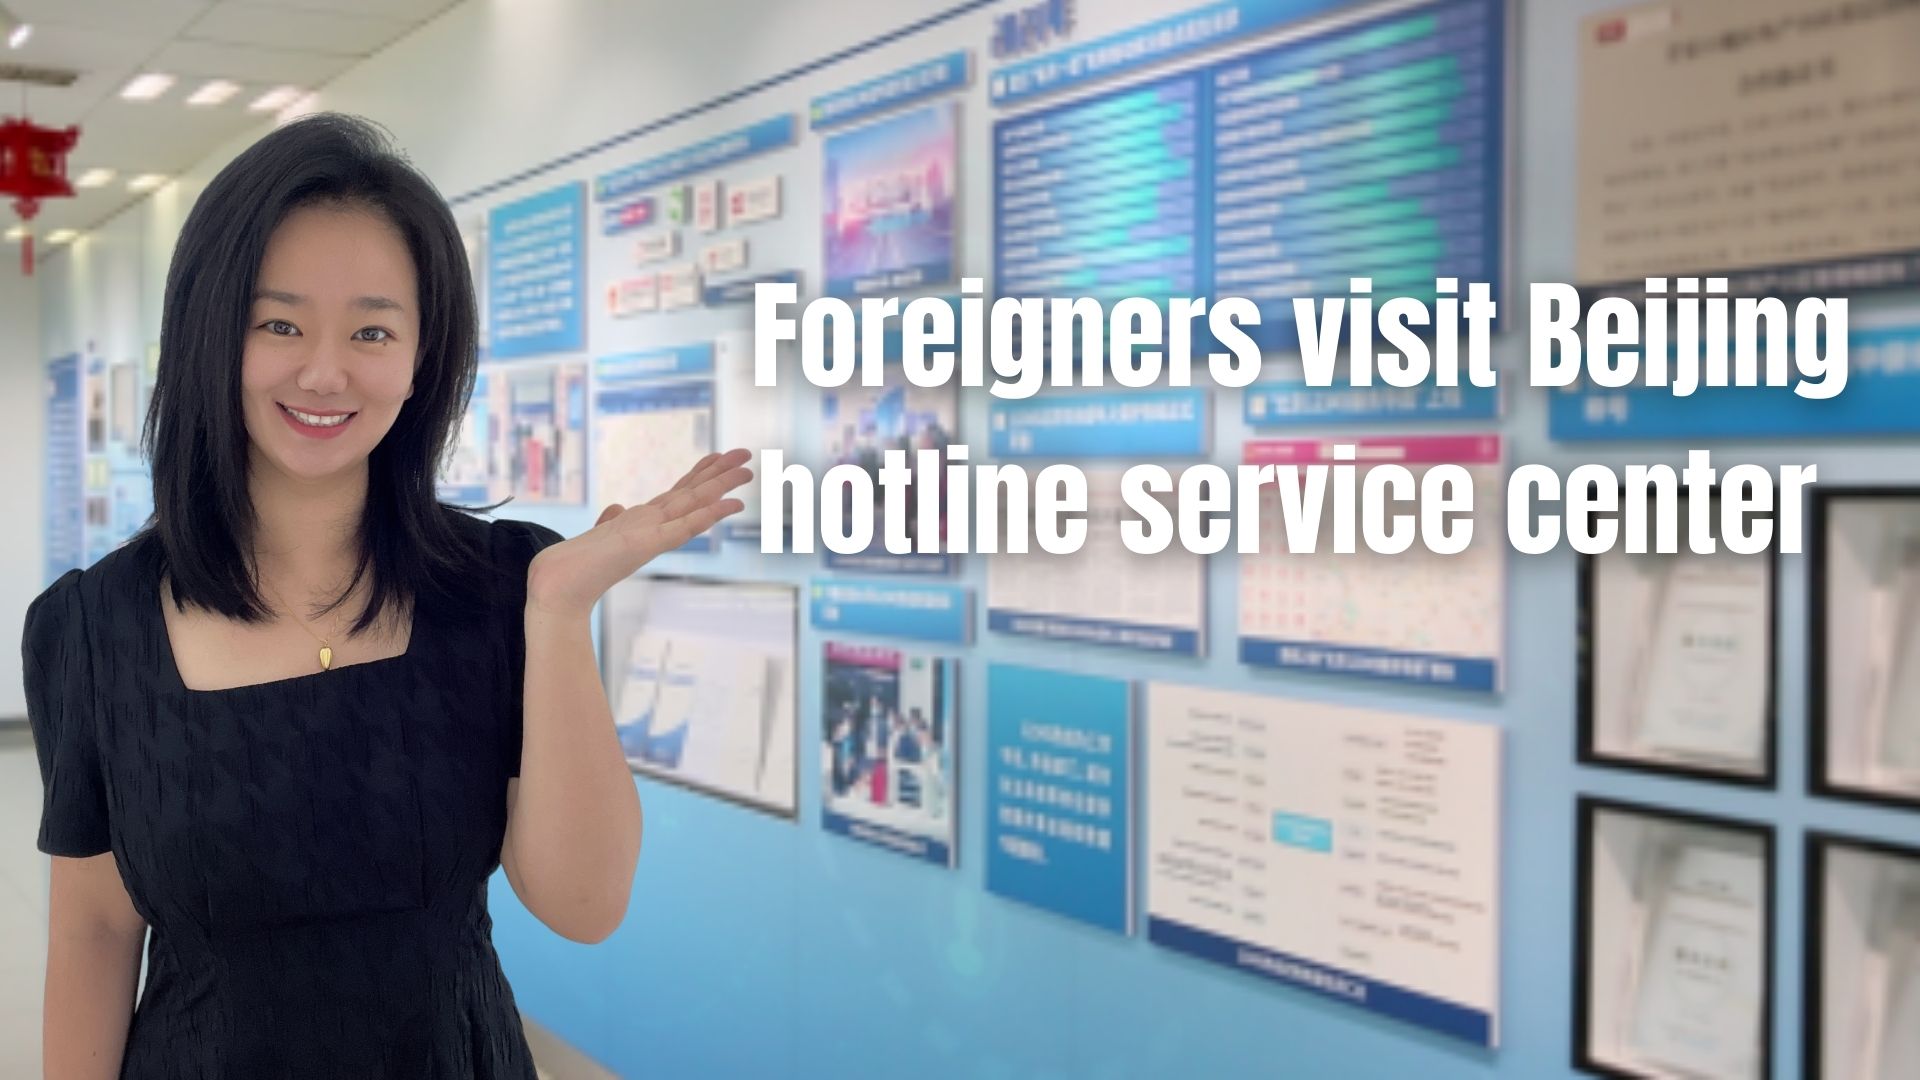 Foreigners visit Beijing hotline service center